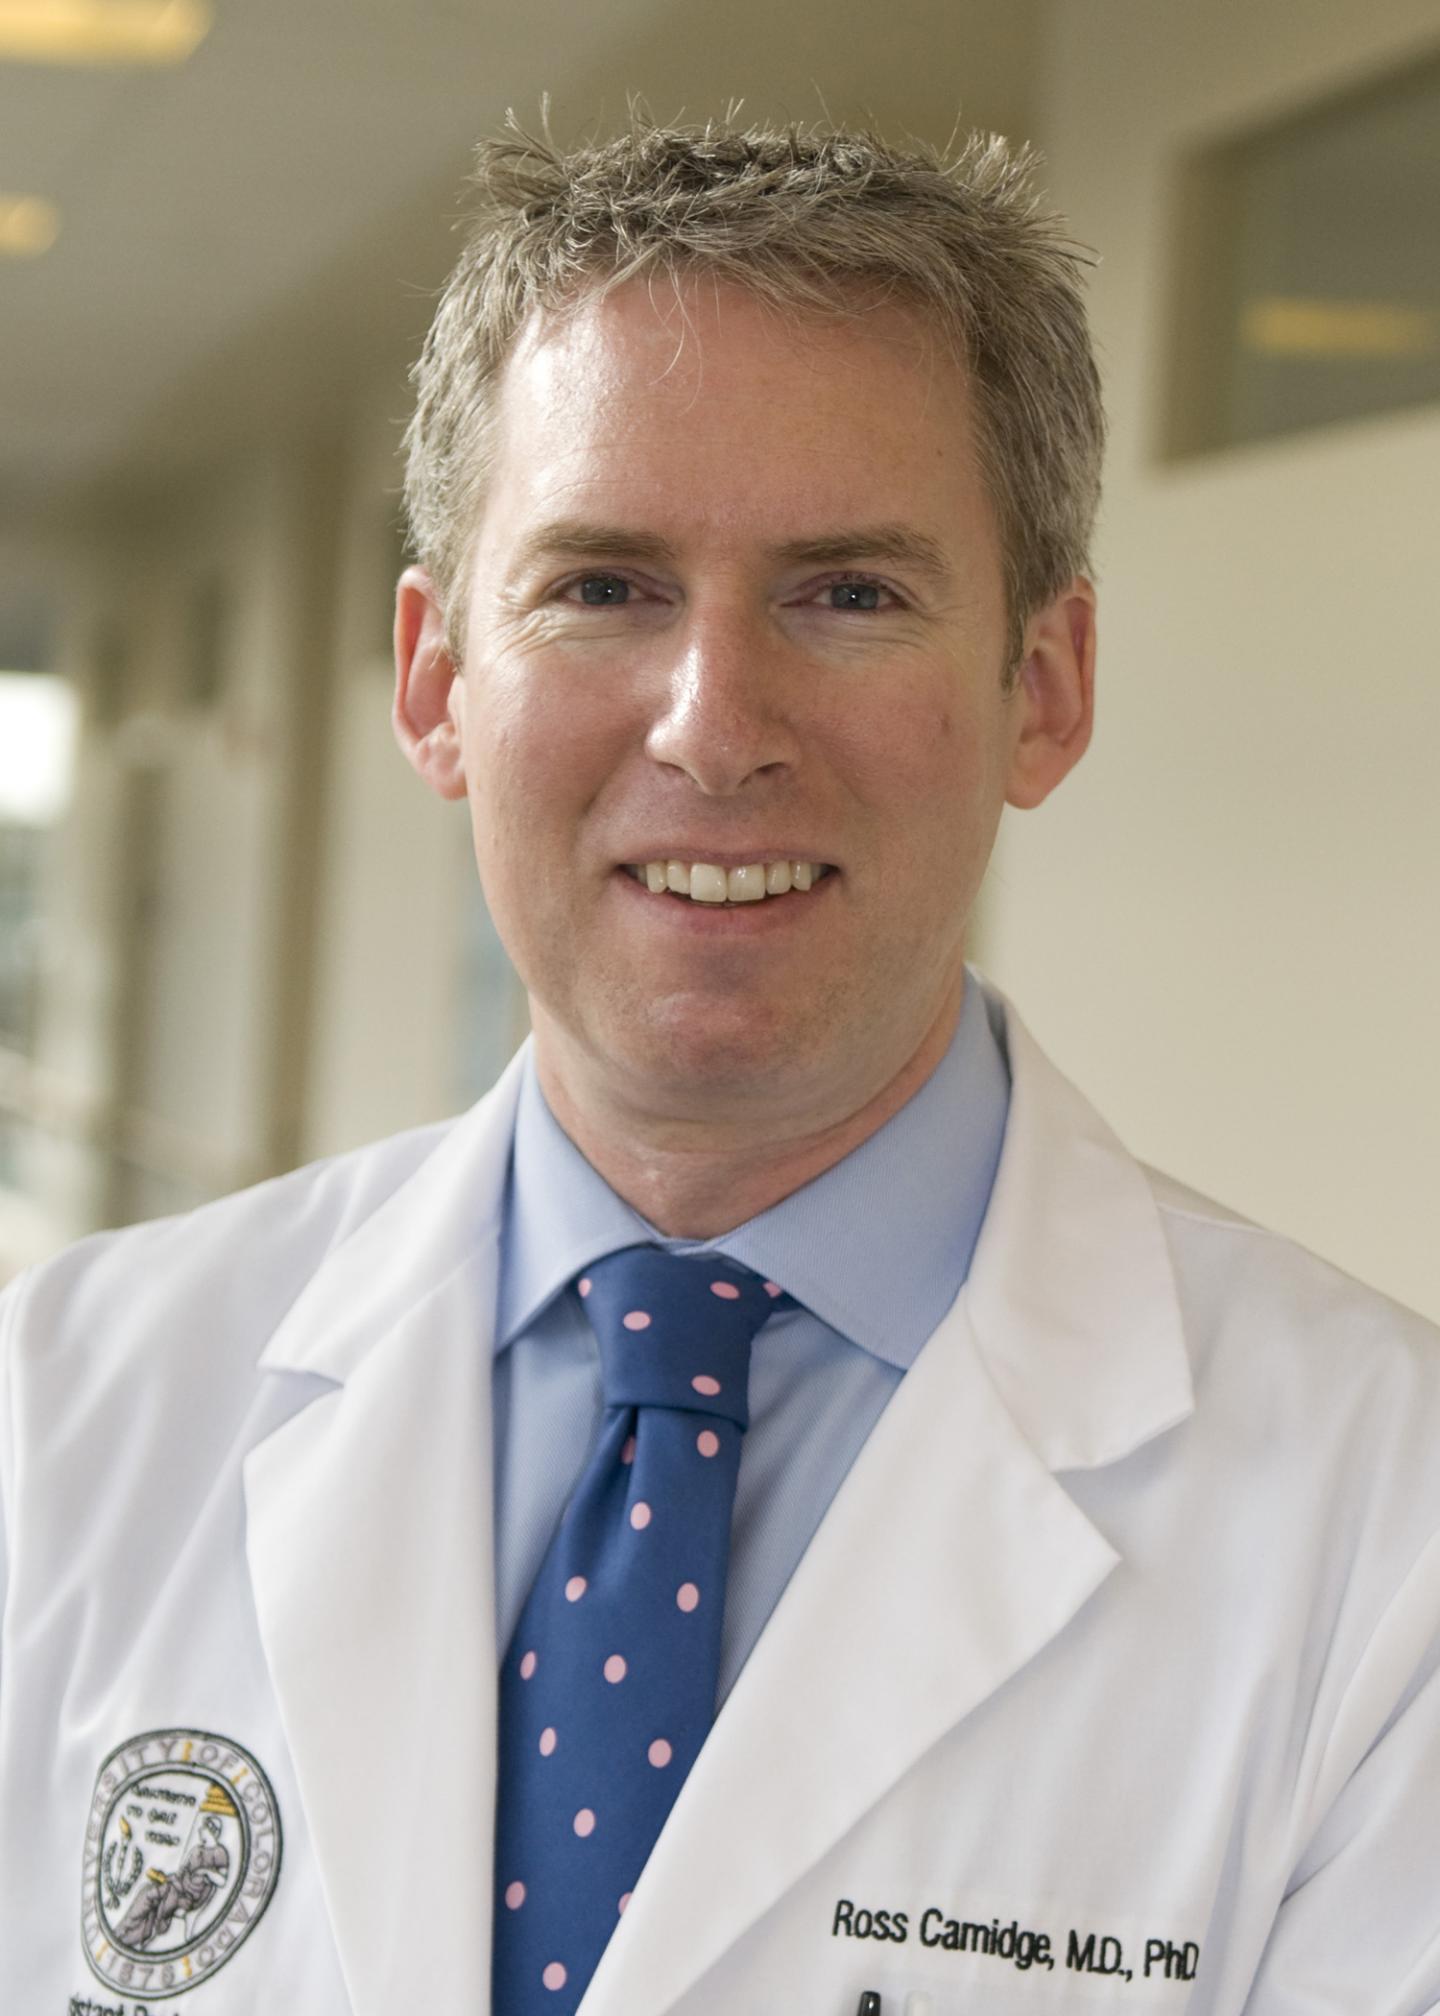 D. Ross Camidge, MD, PhD